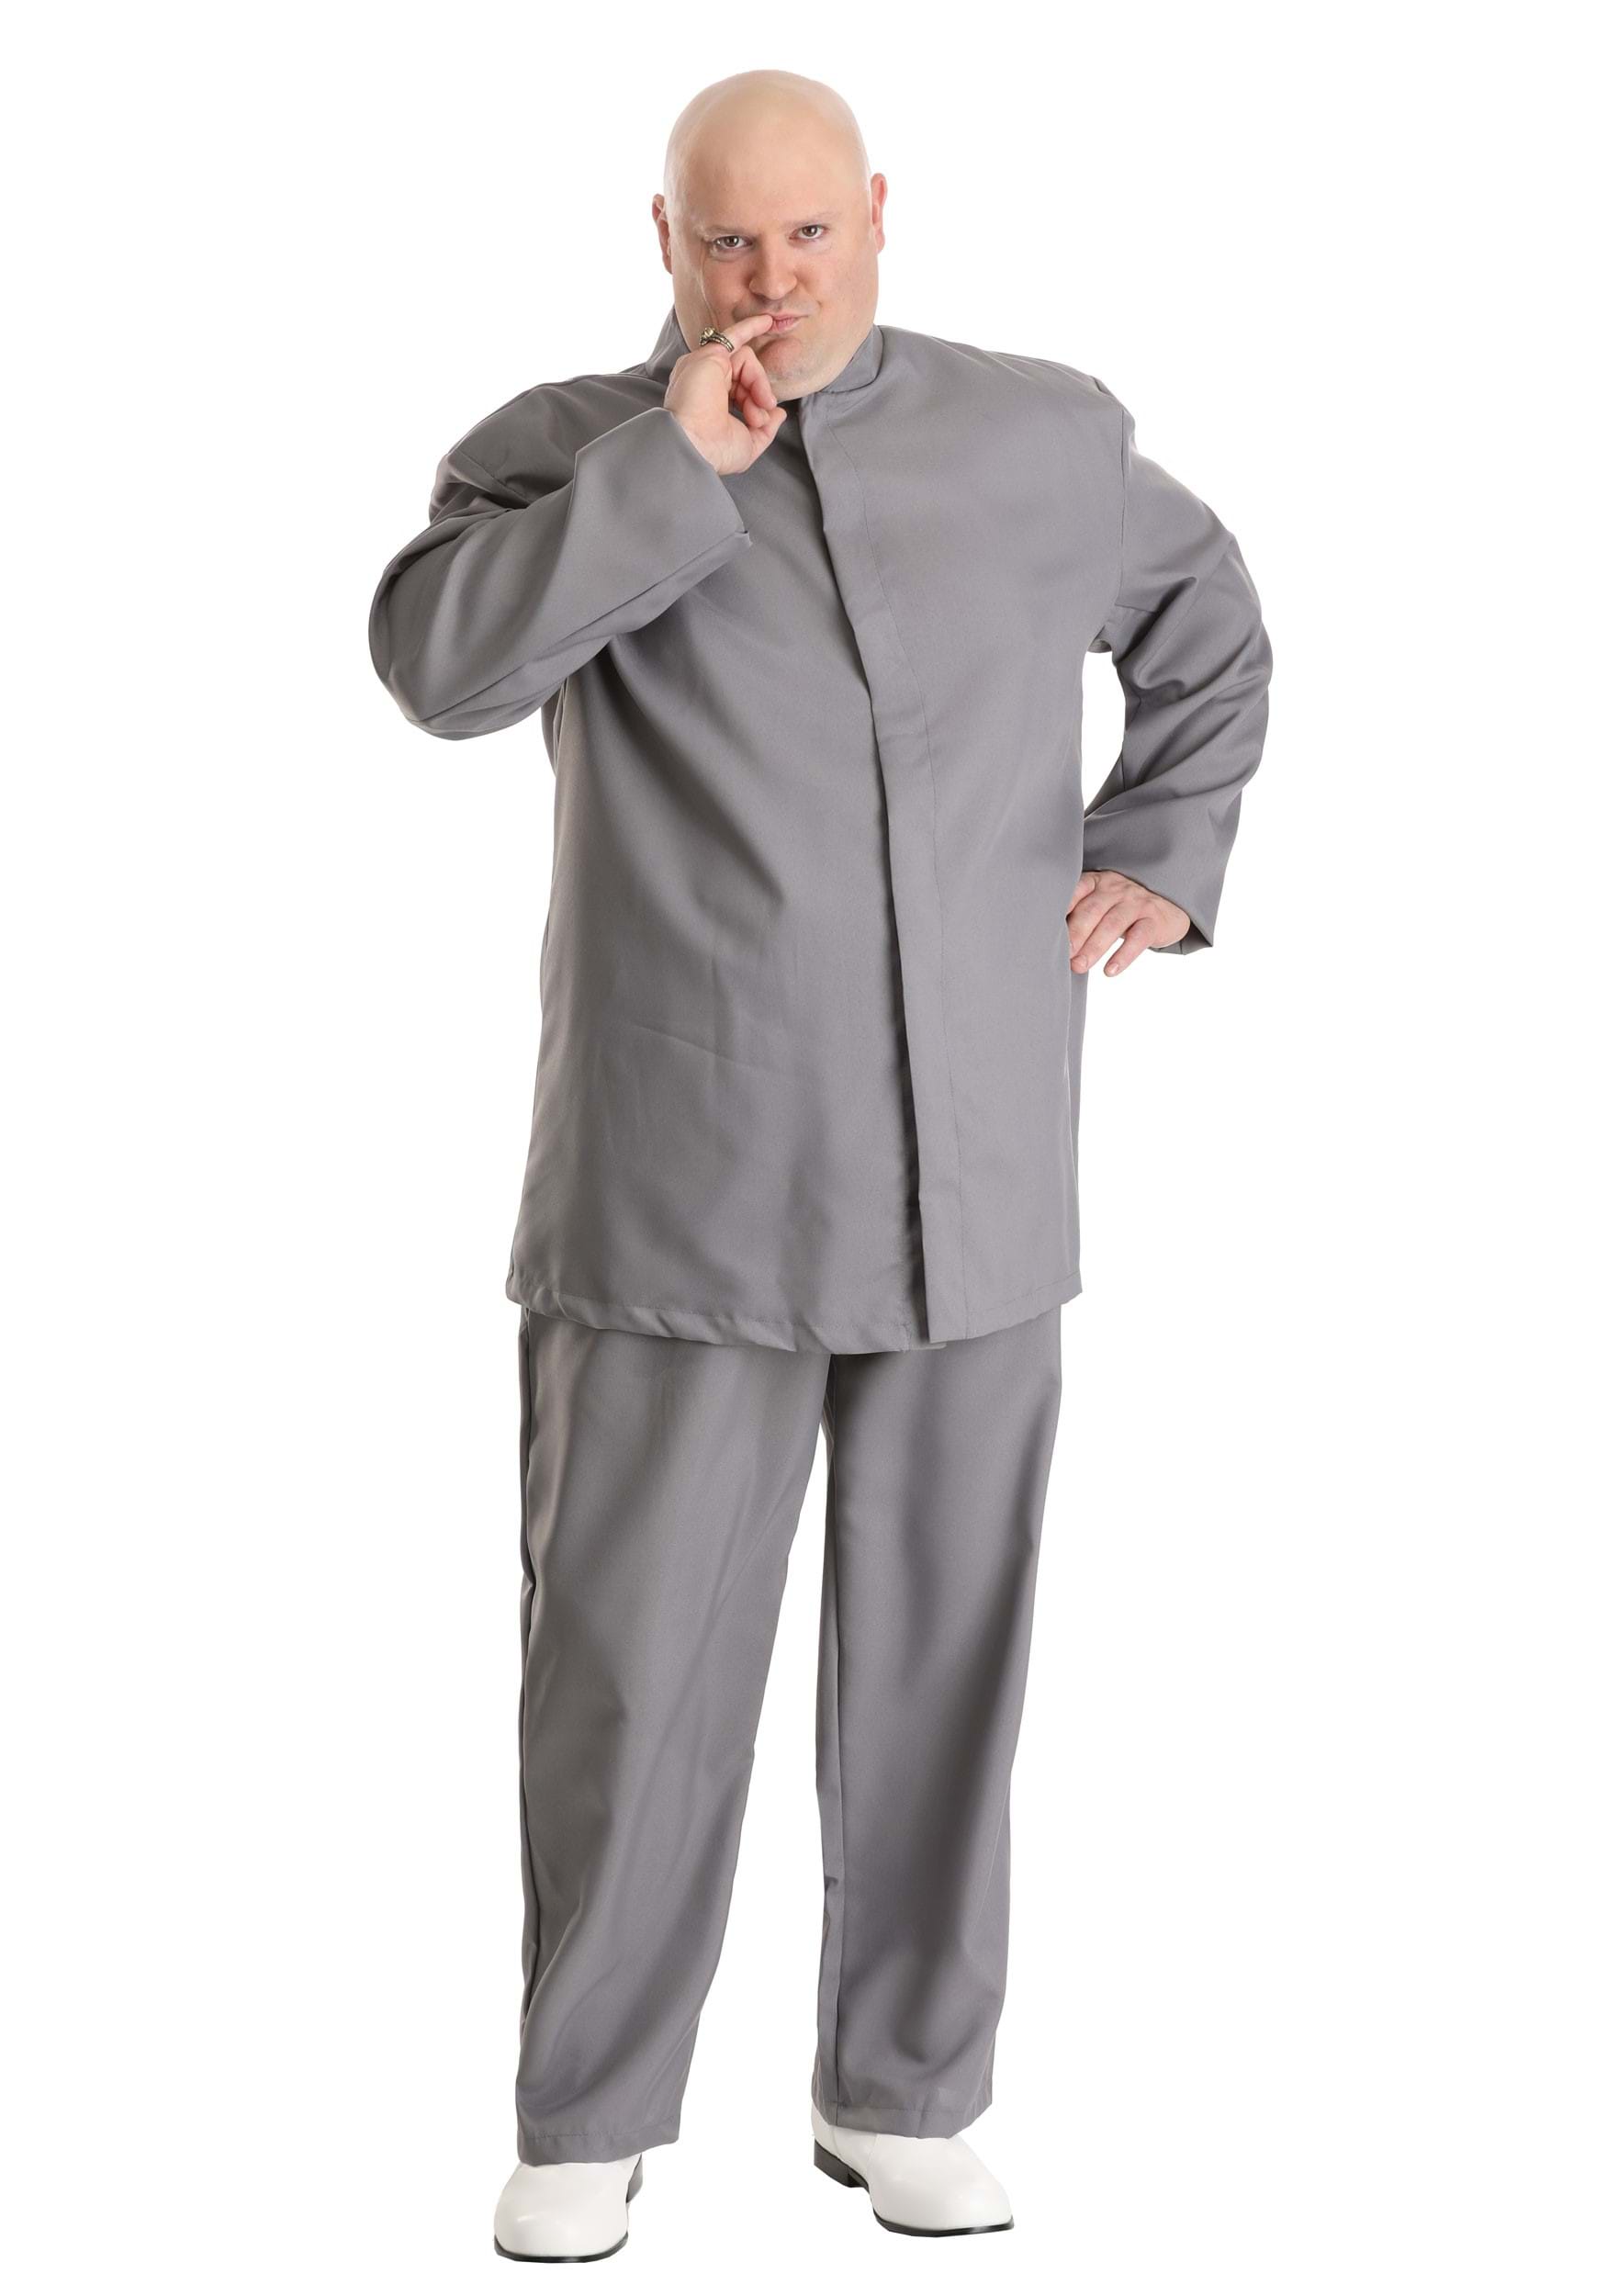 Photos - Fancy Dress FUN Costumes Evil Gray Plus Size Costume Suit for Men Gray FUN0072